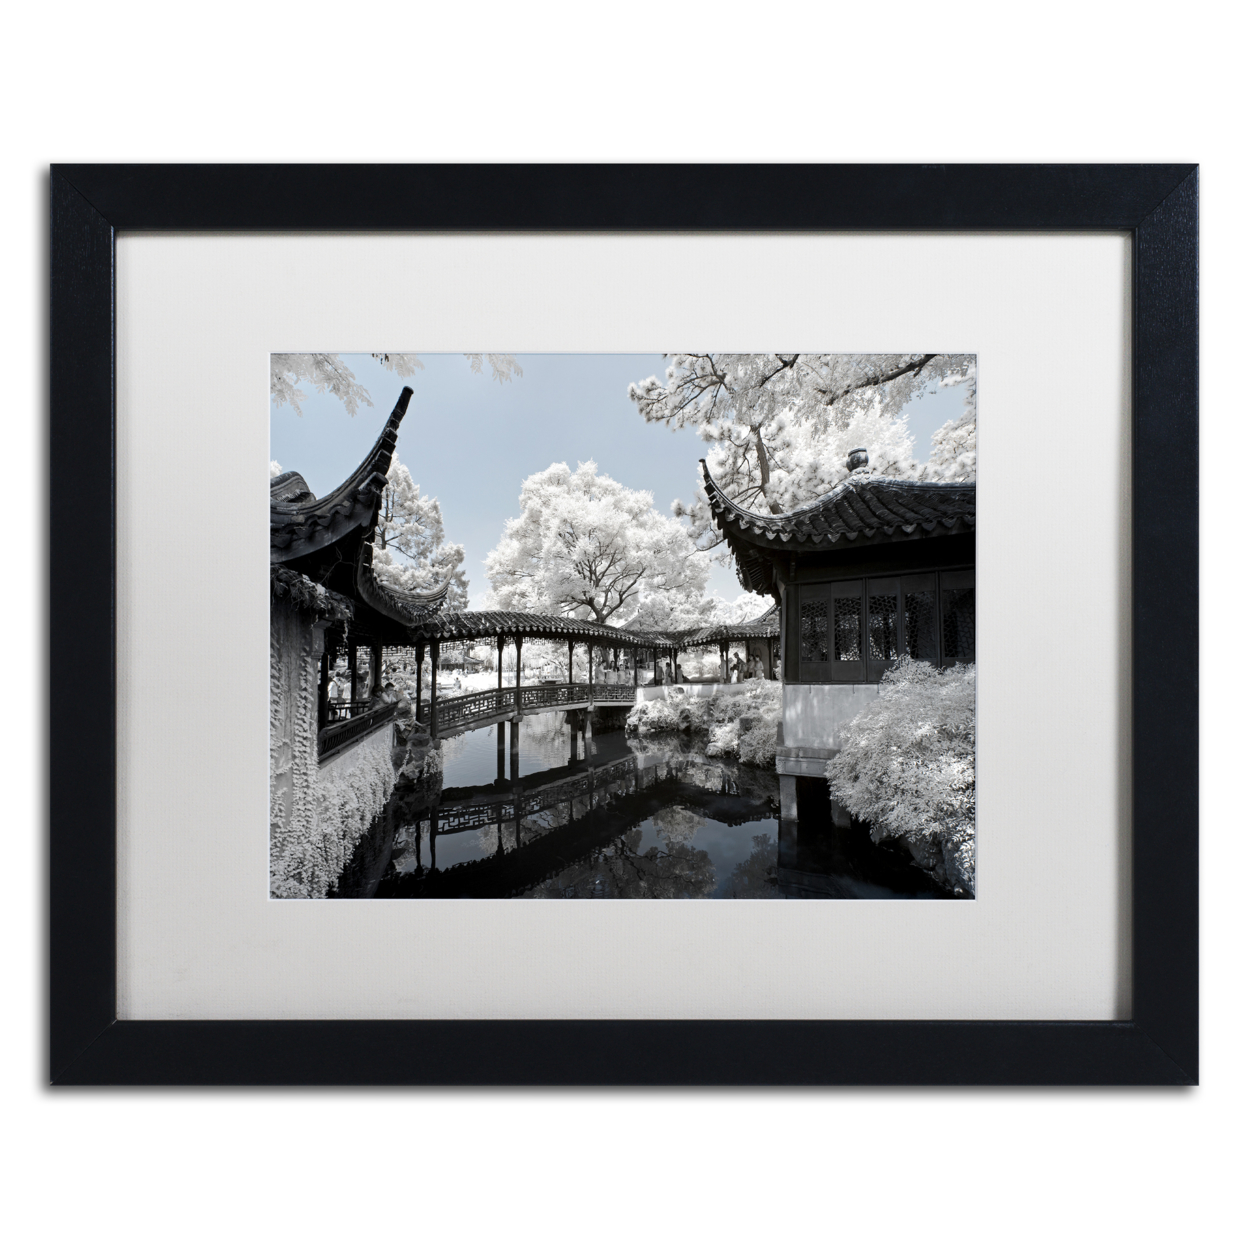 Philippe Hugonnard 'Winter Bridge' Black Wooden Framed Art 18 X 22 Inches